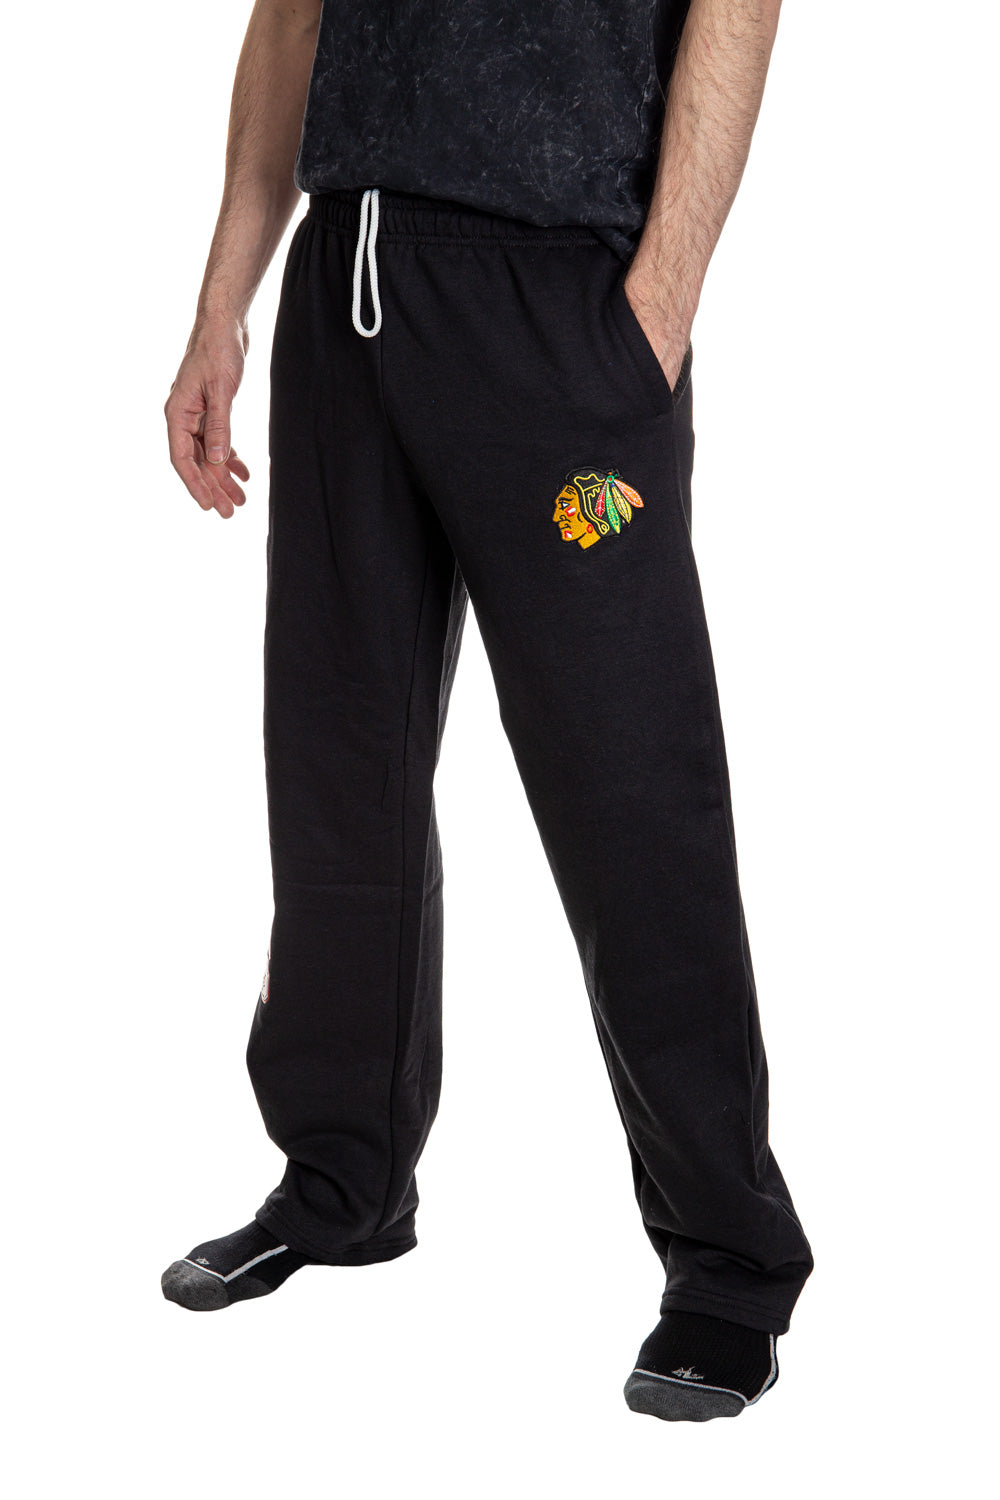 Chicago Blackhawks Premium Fleece Sweatpants Side View of Embroidered Logo.